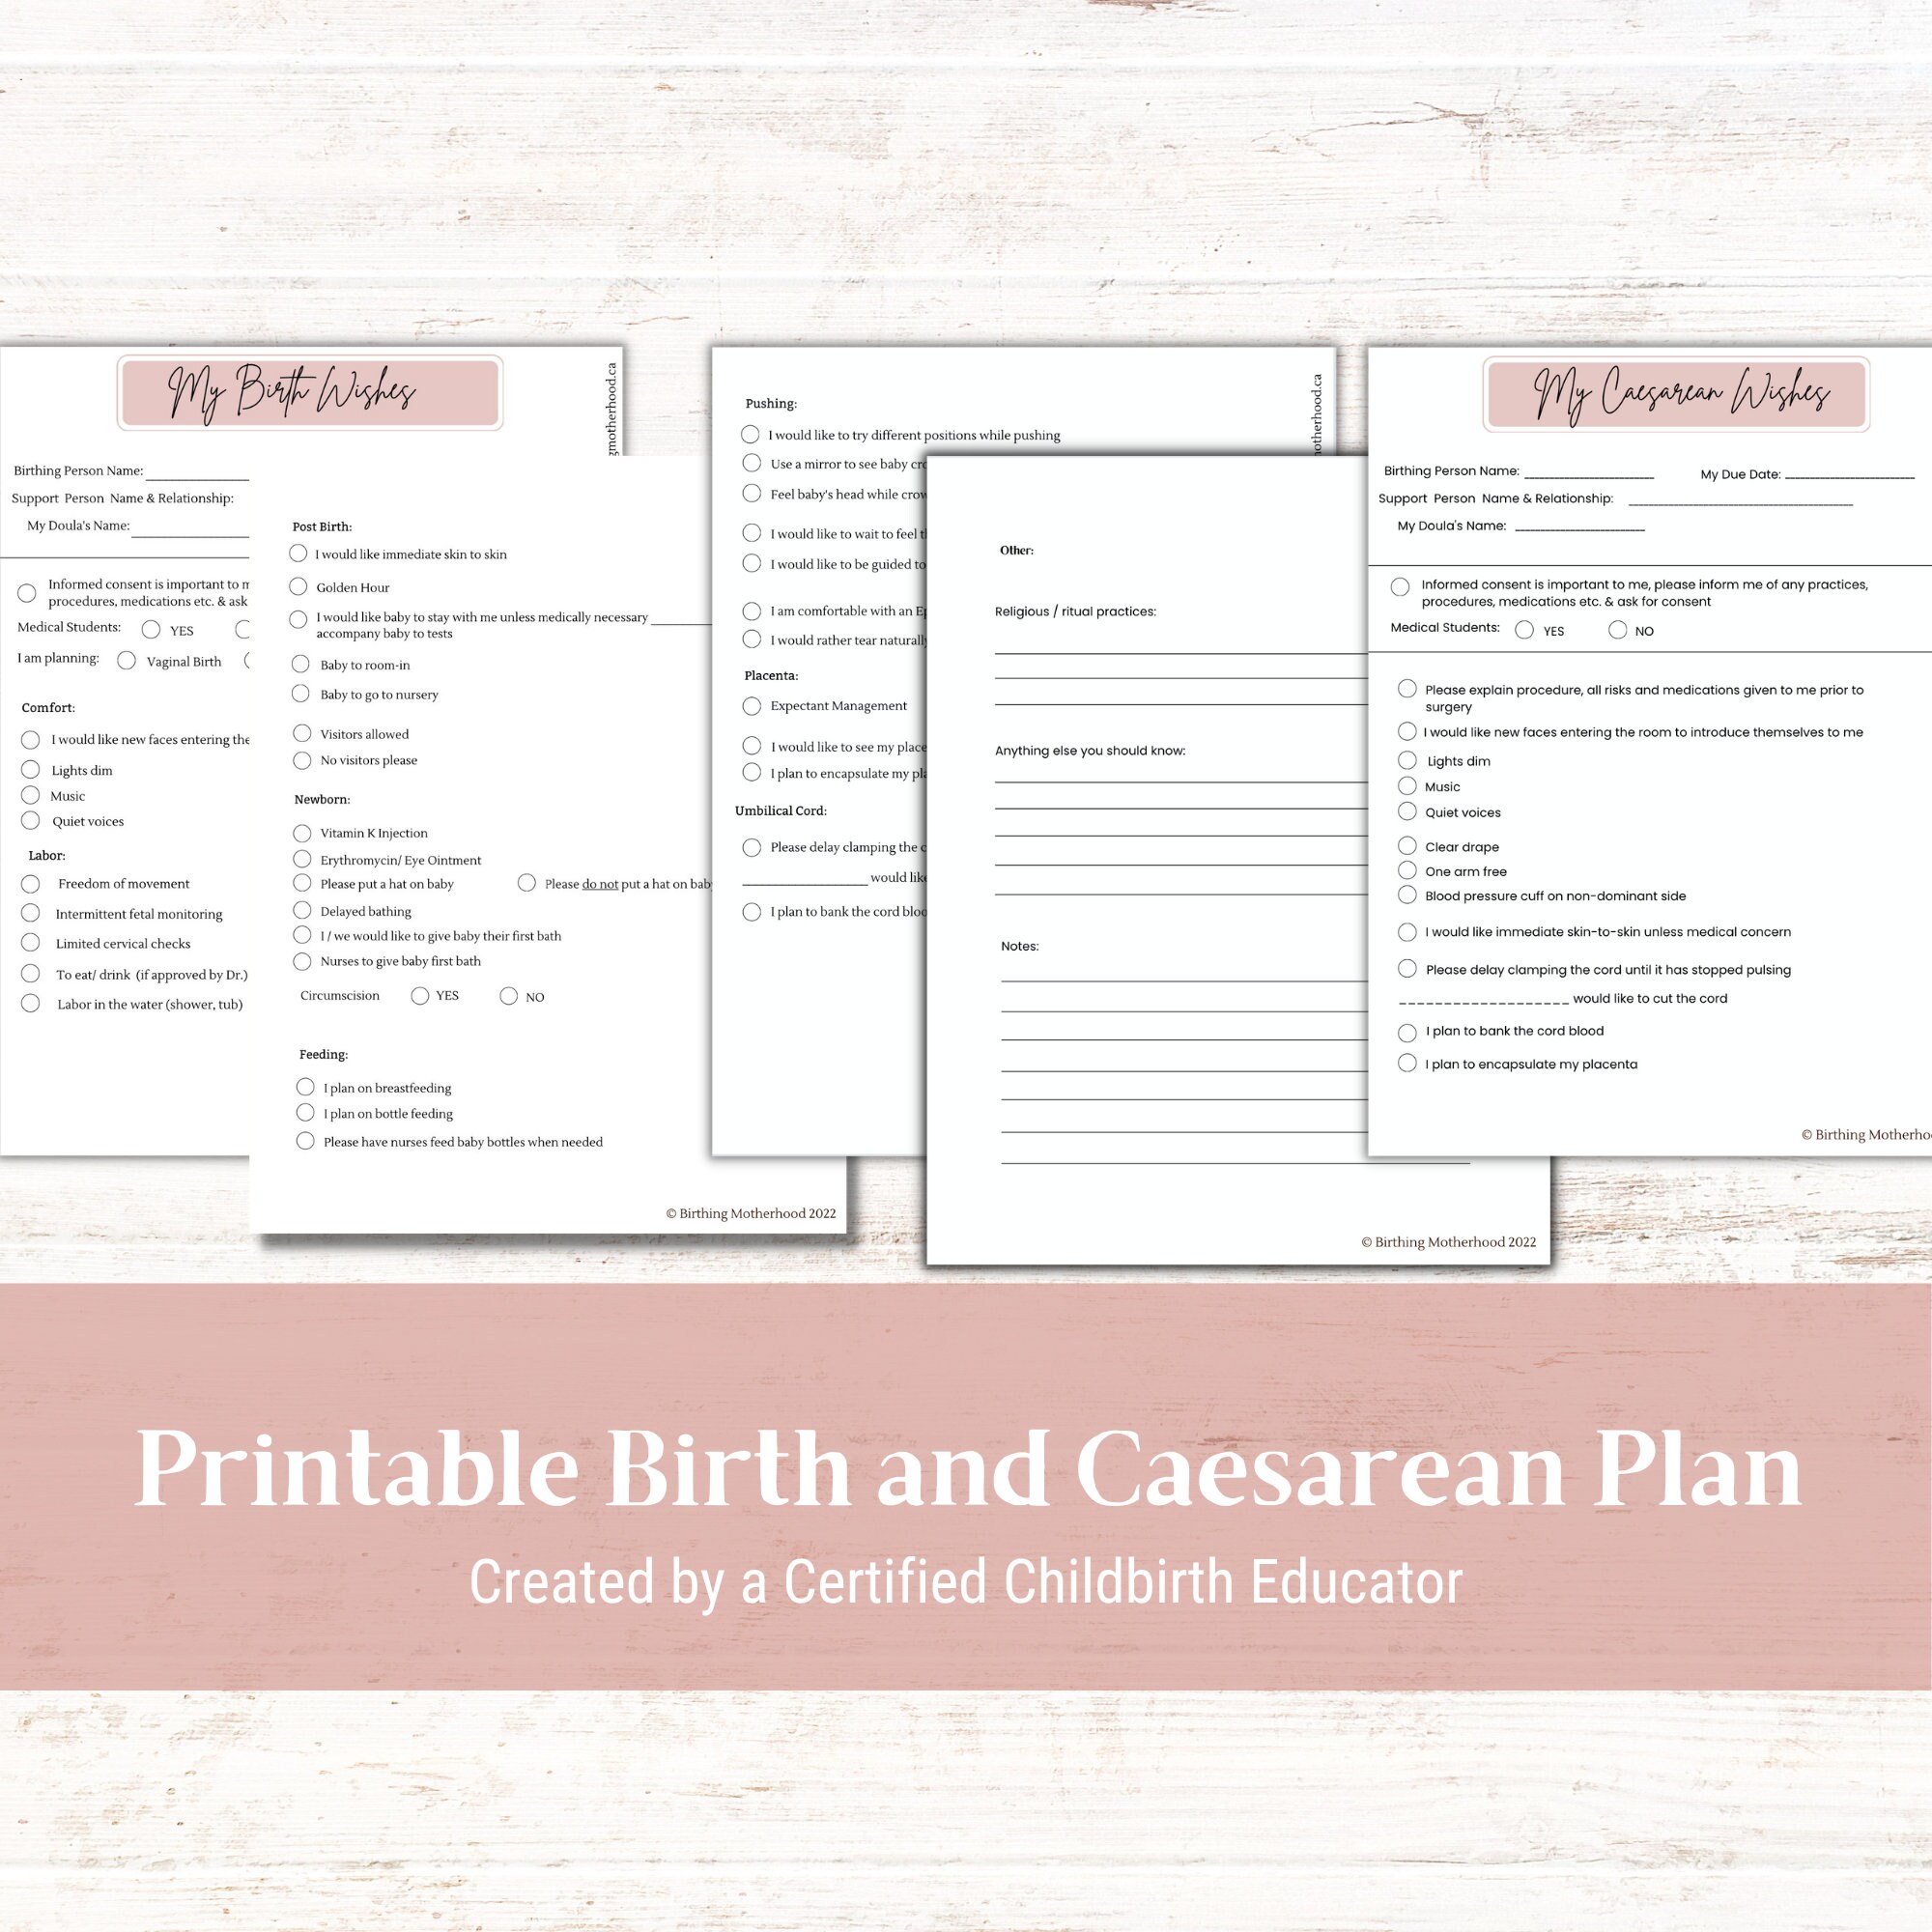 Printable Birth Plan Plus C-section Preferences - Etsy